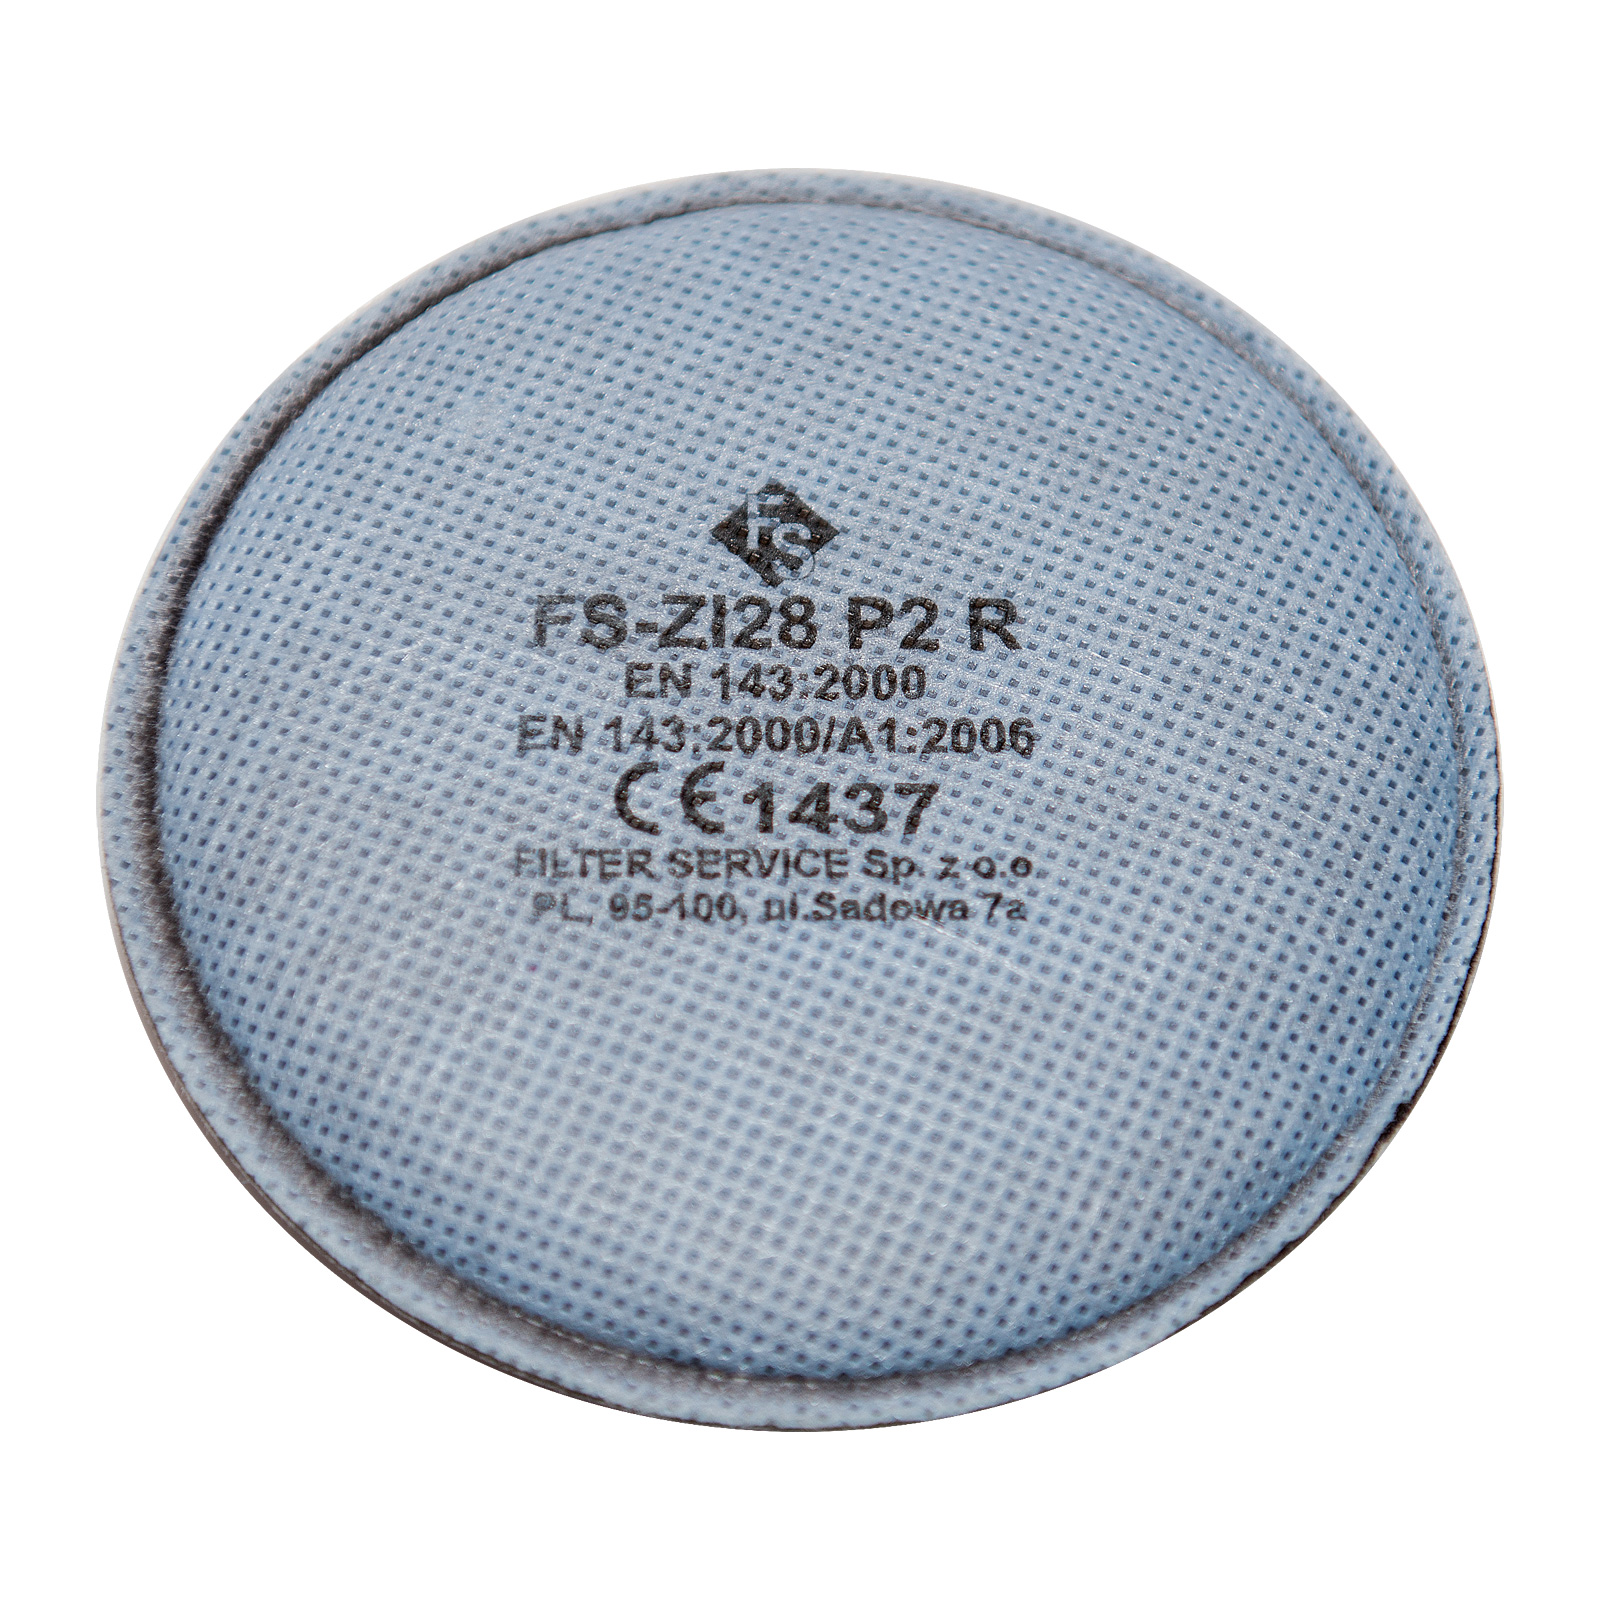 Částicový filtr ZI28 (P2R) RS_TOP